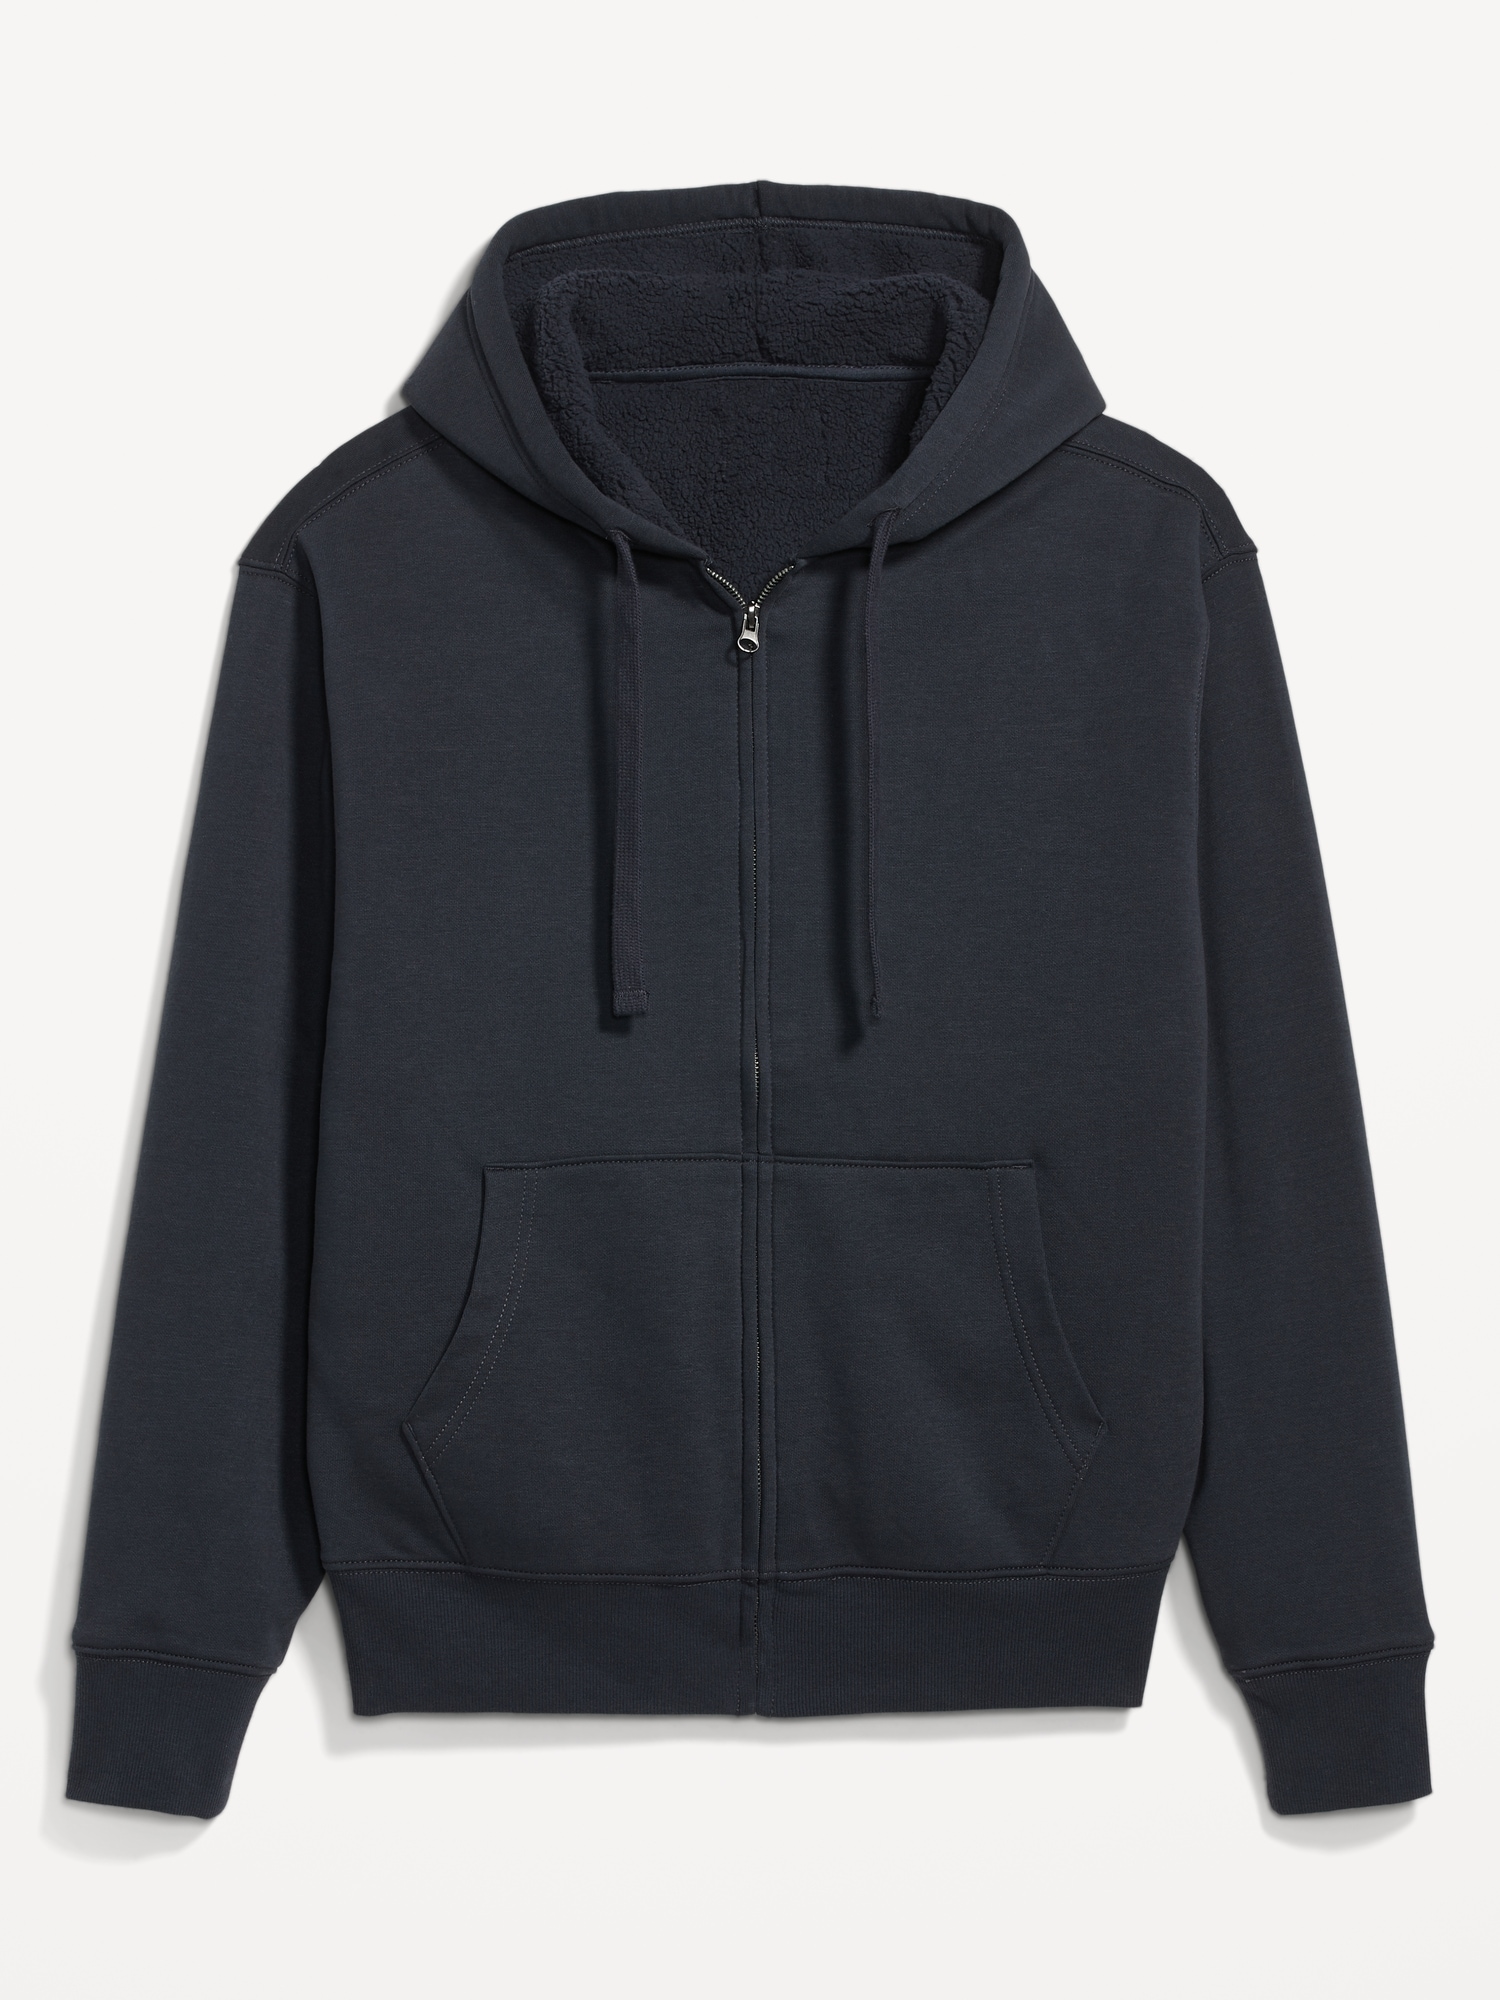 Sherpa Lined Zip Hooded Sweatshirts